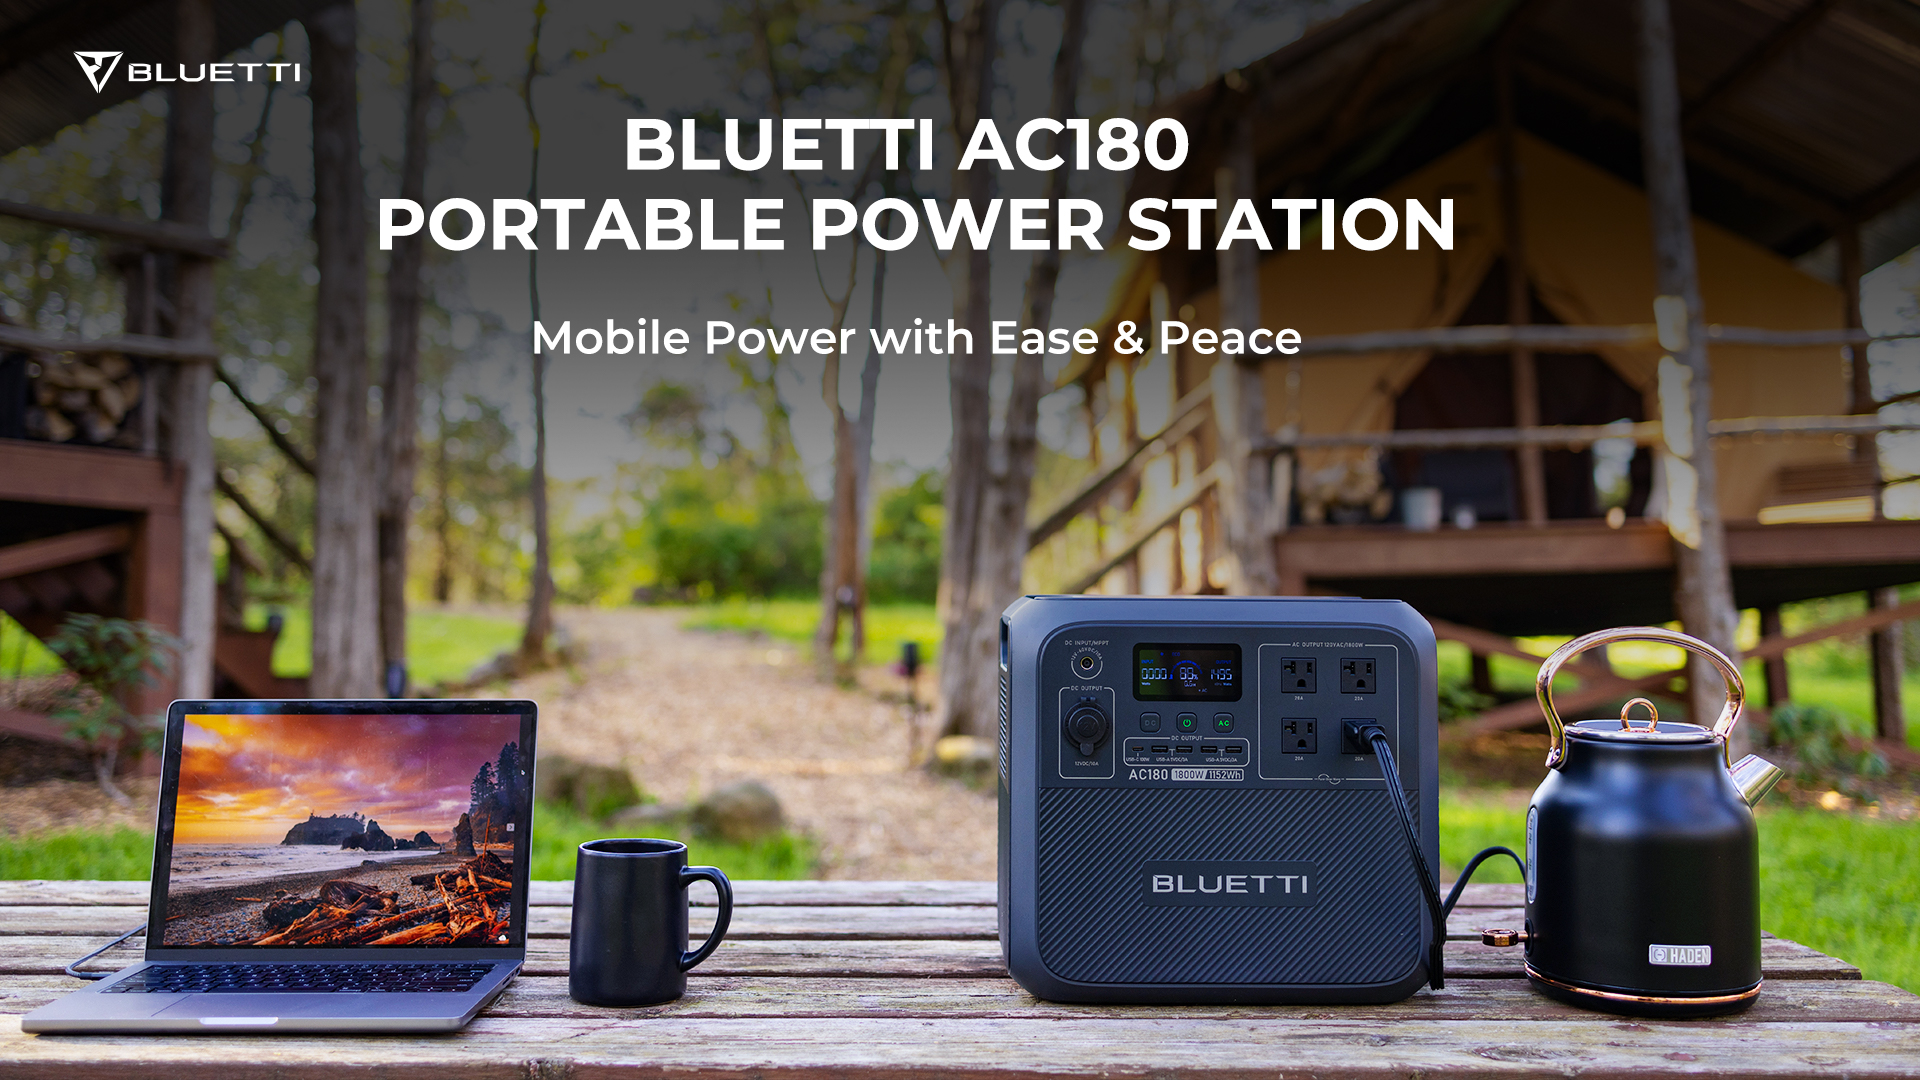 BLUETTI AC180 1800W 1152Wh Portable Power Station MPPT Solar Generator For  Trip